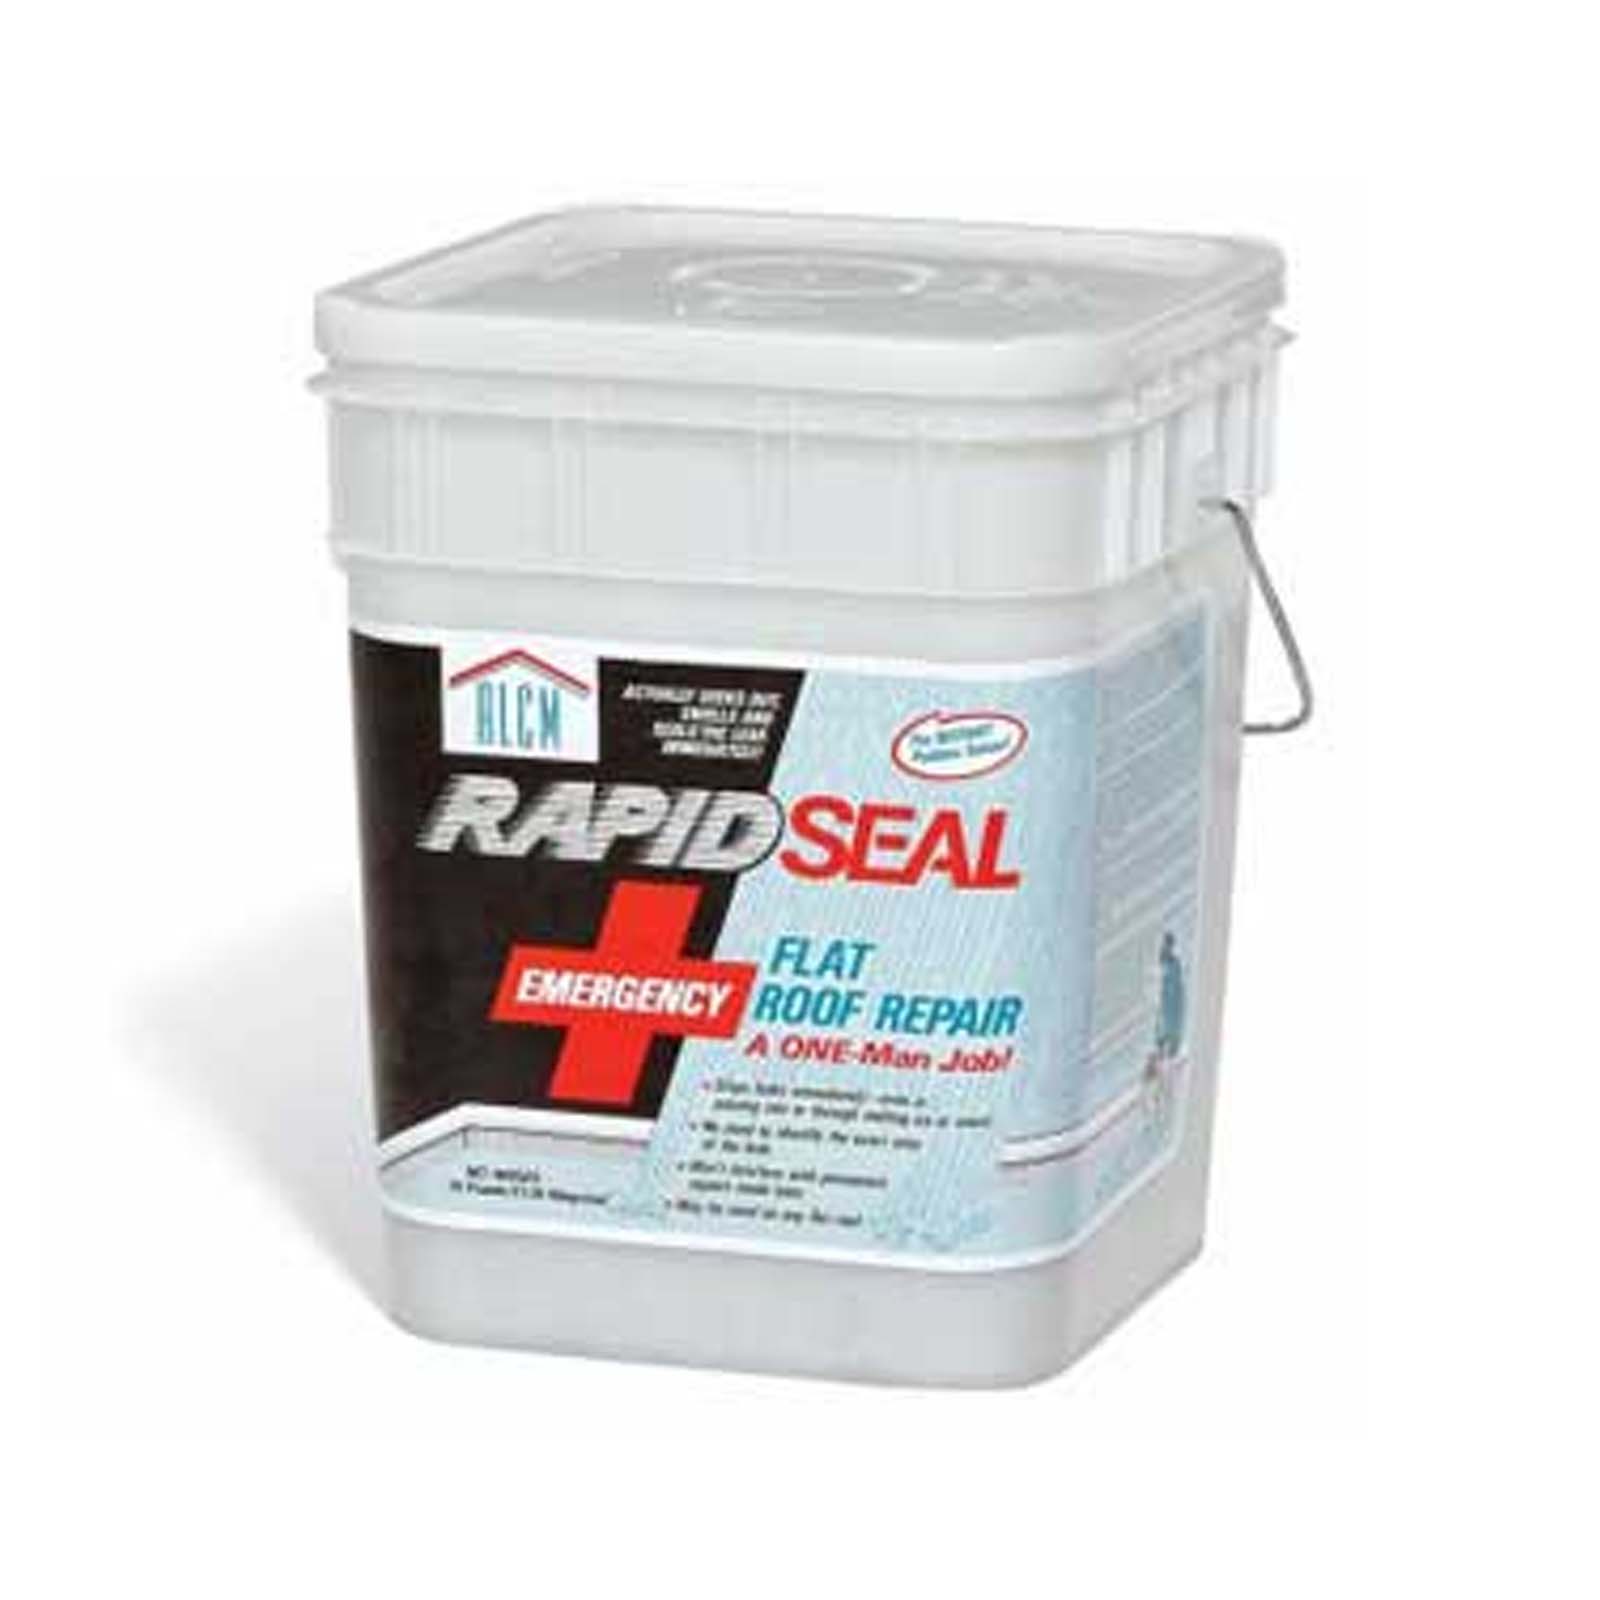 Rapid Seal Flat Roof Repair 25lb. Bucket